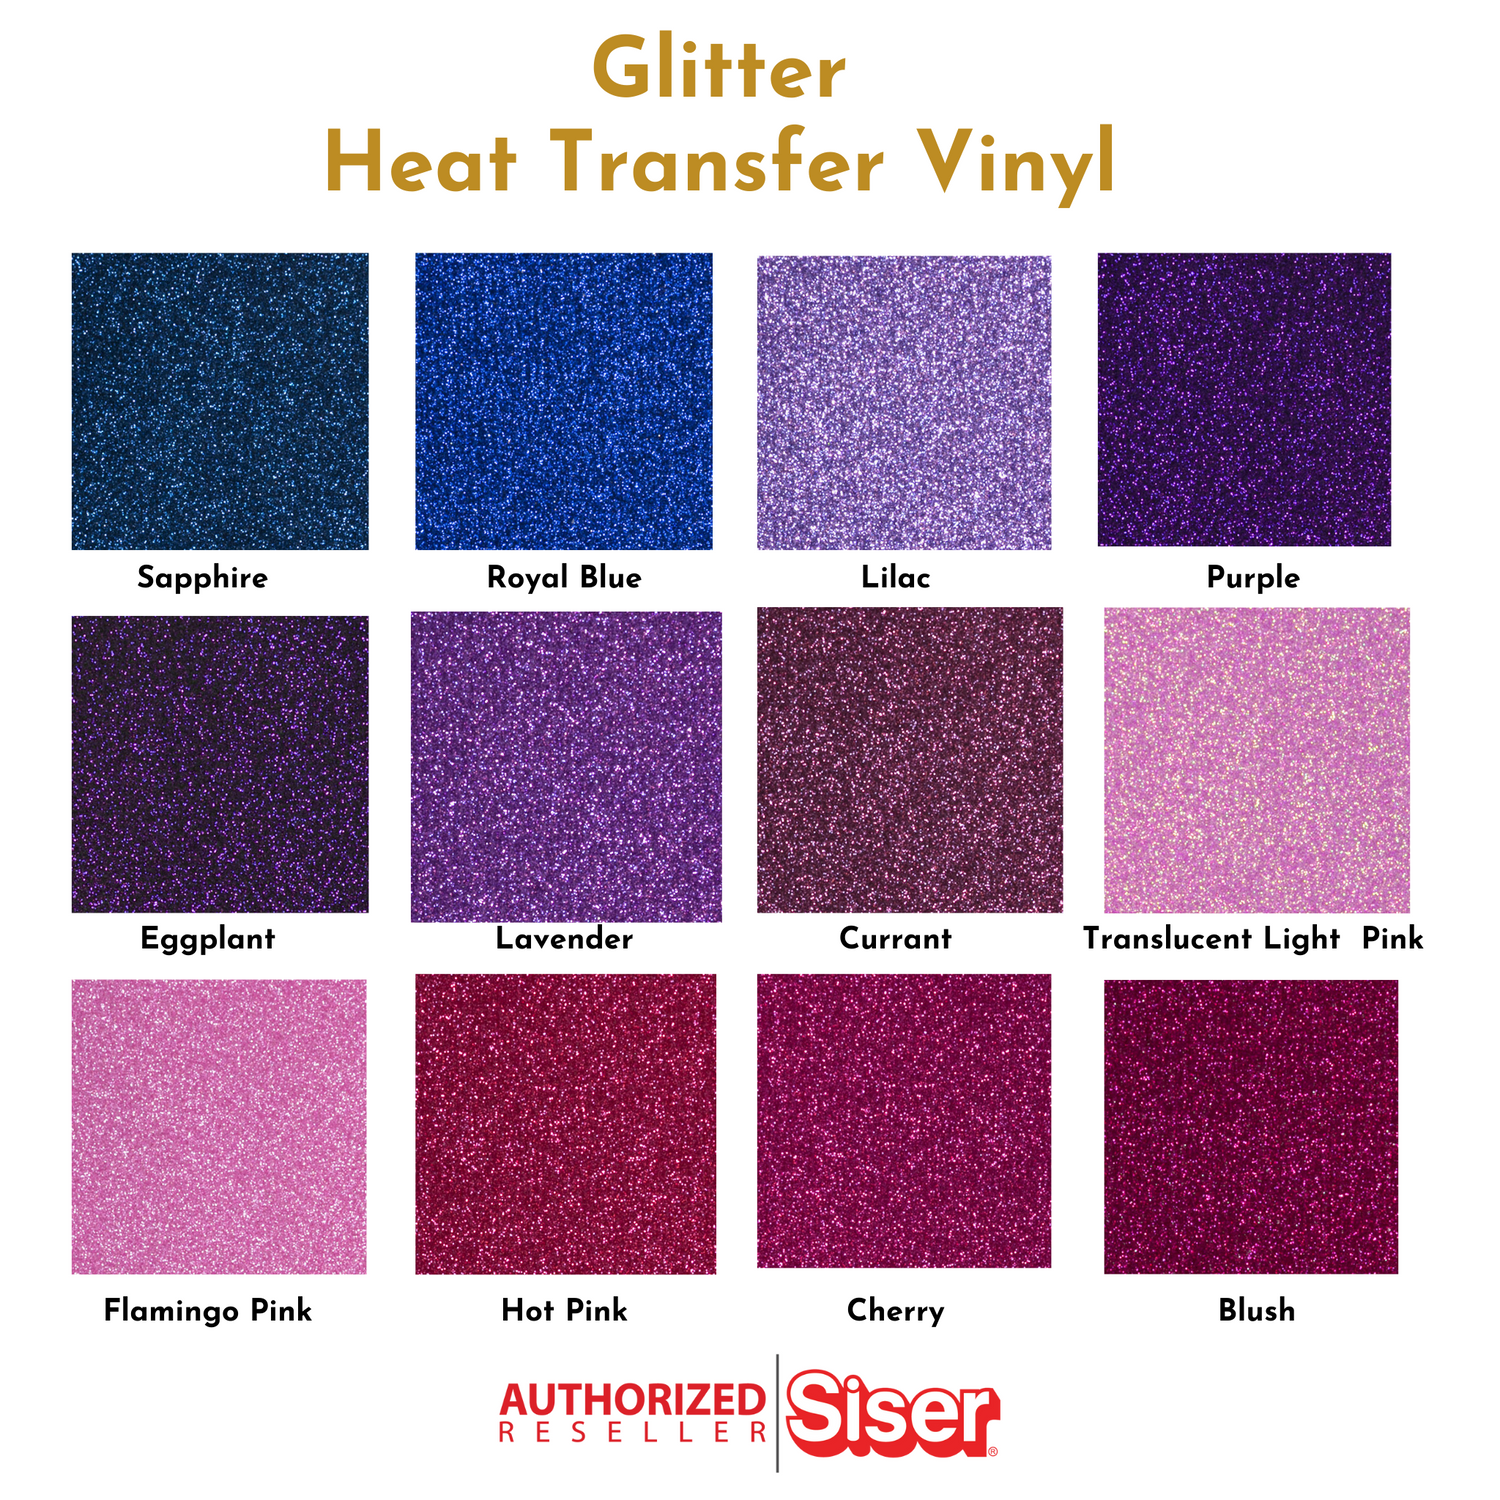 Flamingo Pink Glitter Heat Transfer Vinyl